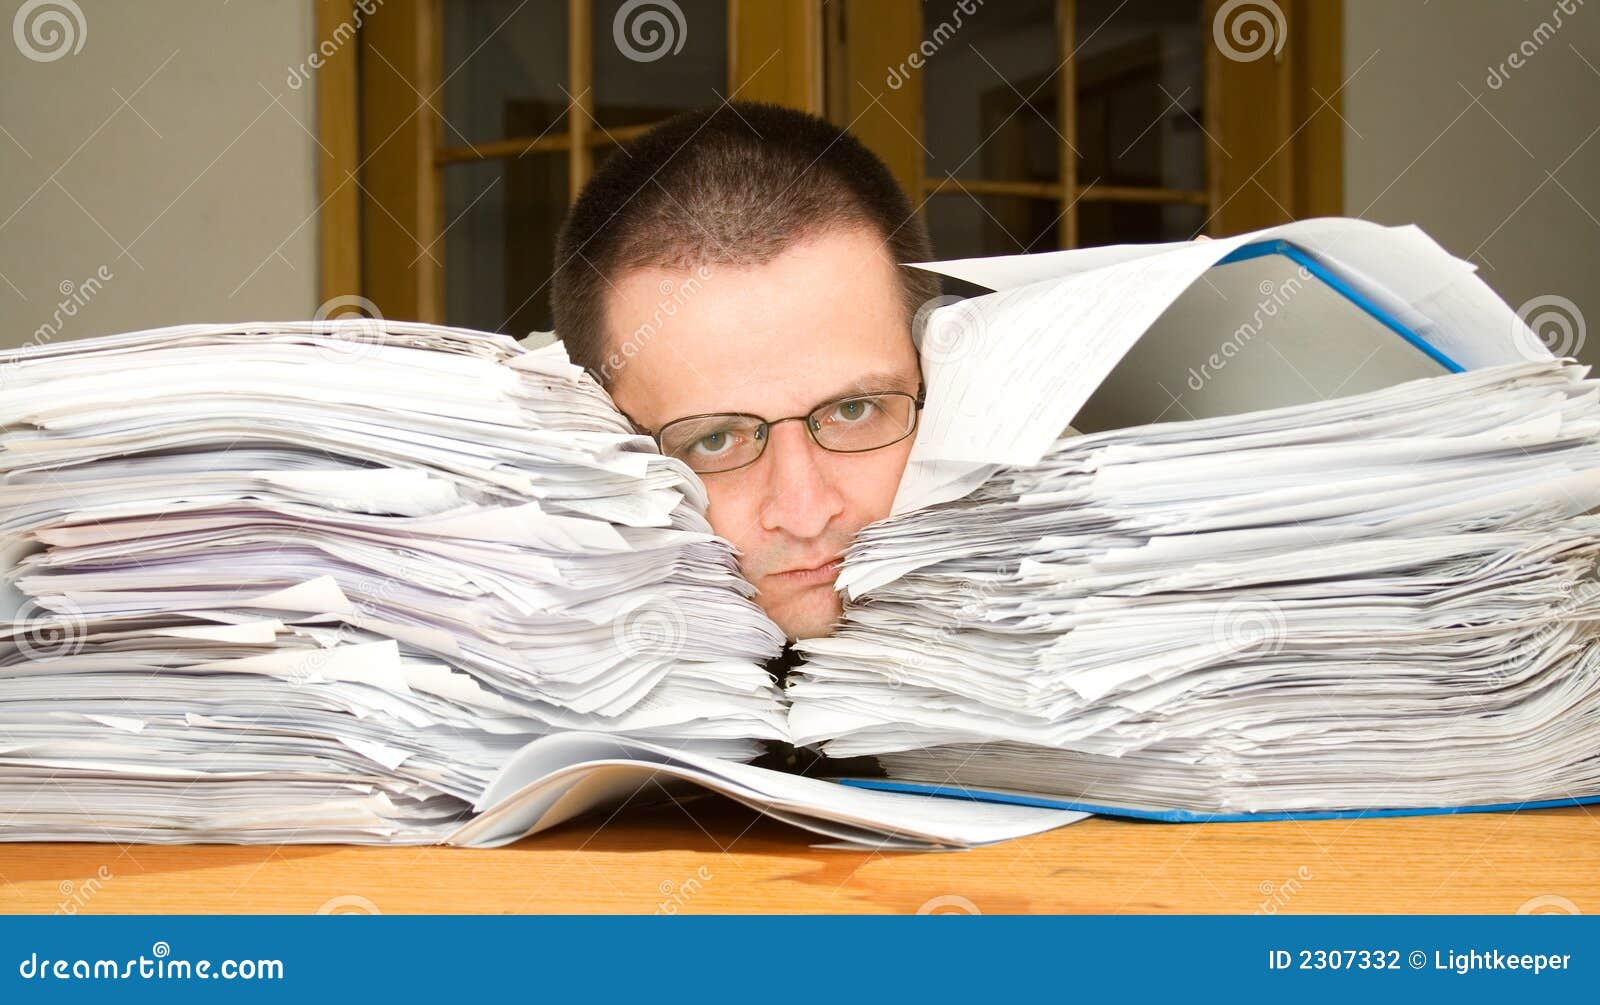 too much paperwork